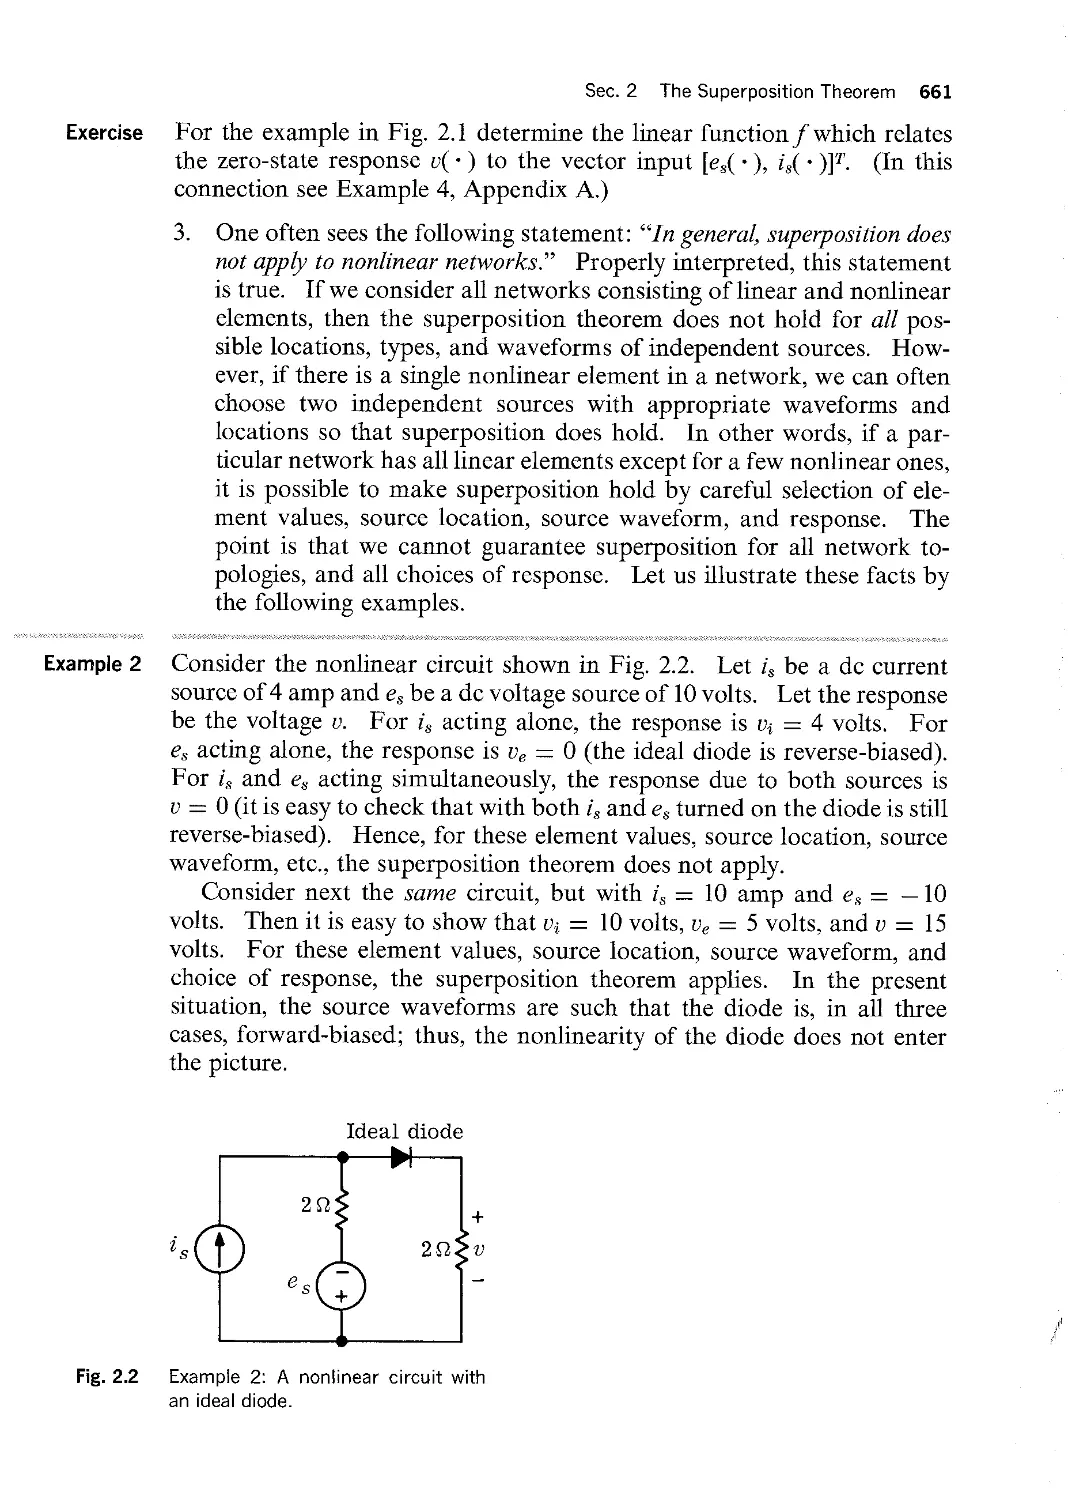 4.4 - The Complete Response
5 - Computation of Convolution Integrals